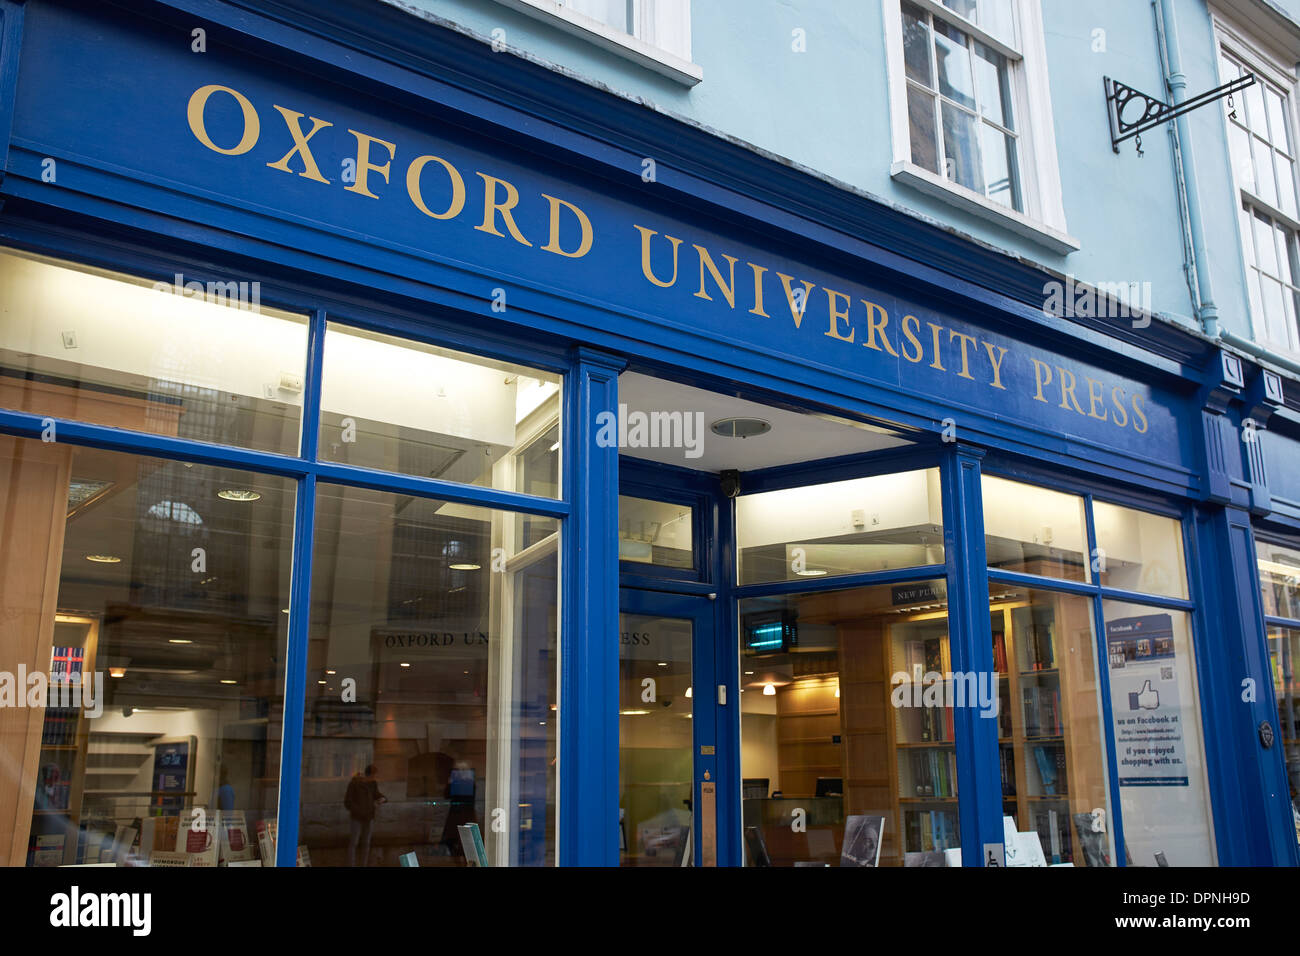 Oxford University Press shop front in Oxford city centre Stock Photo